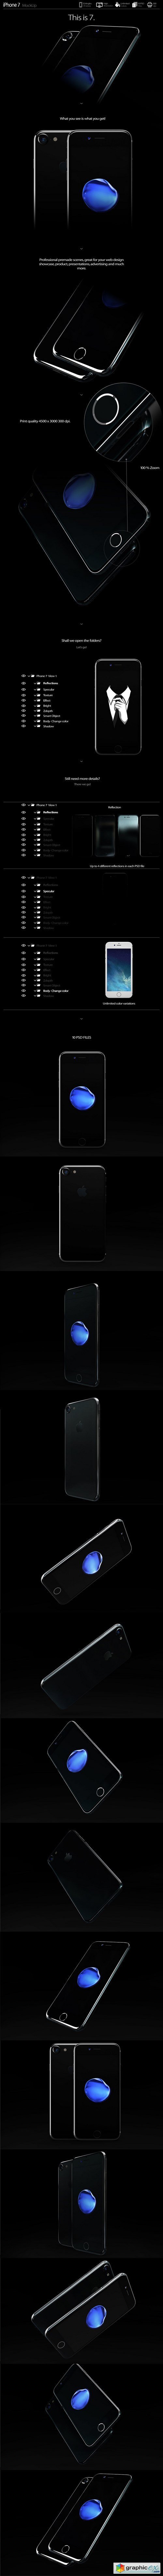 iPhone 7 Jet Black Edition Mock Up